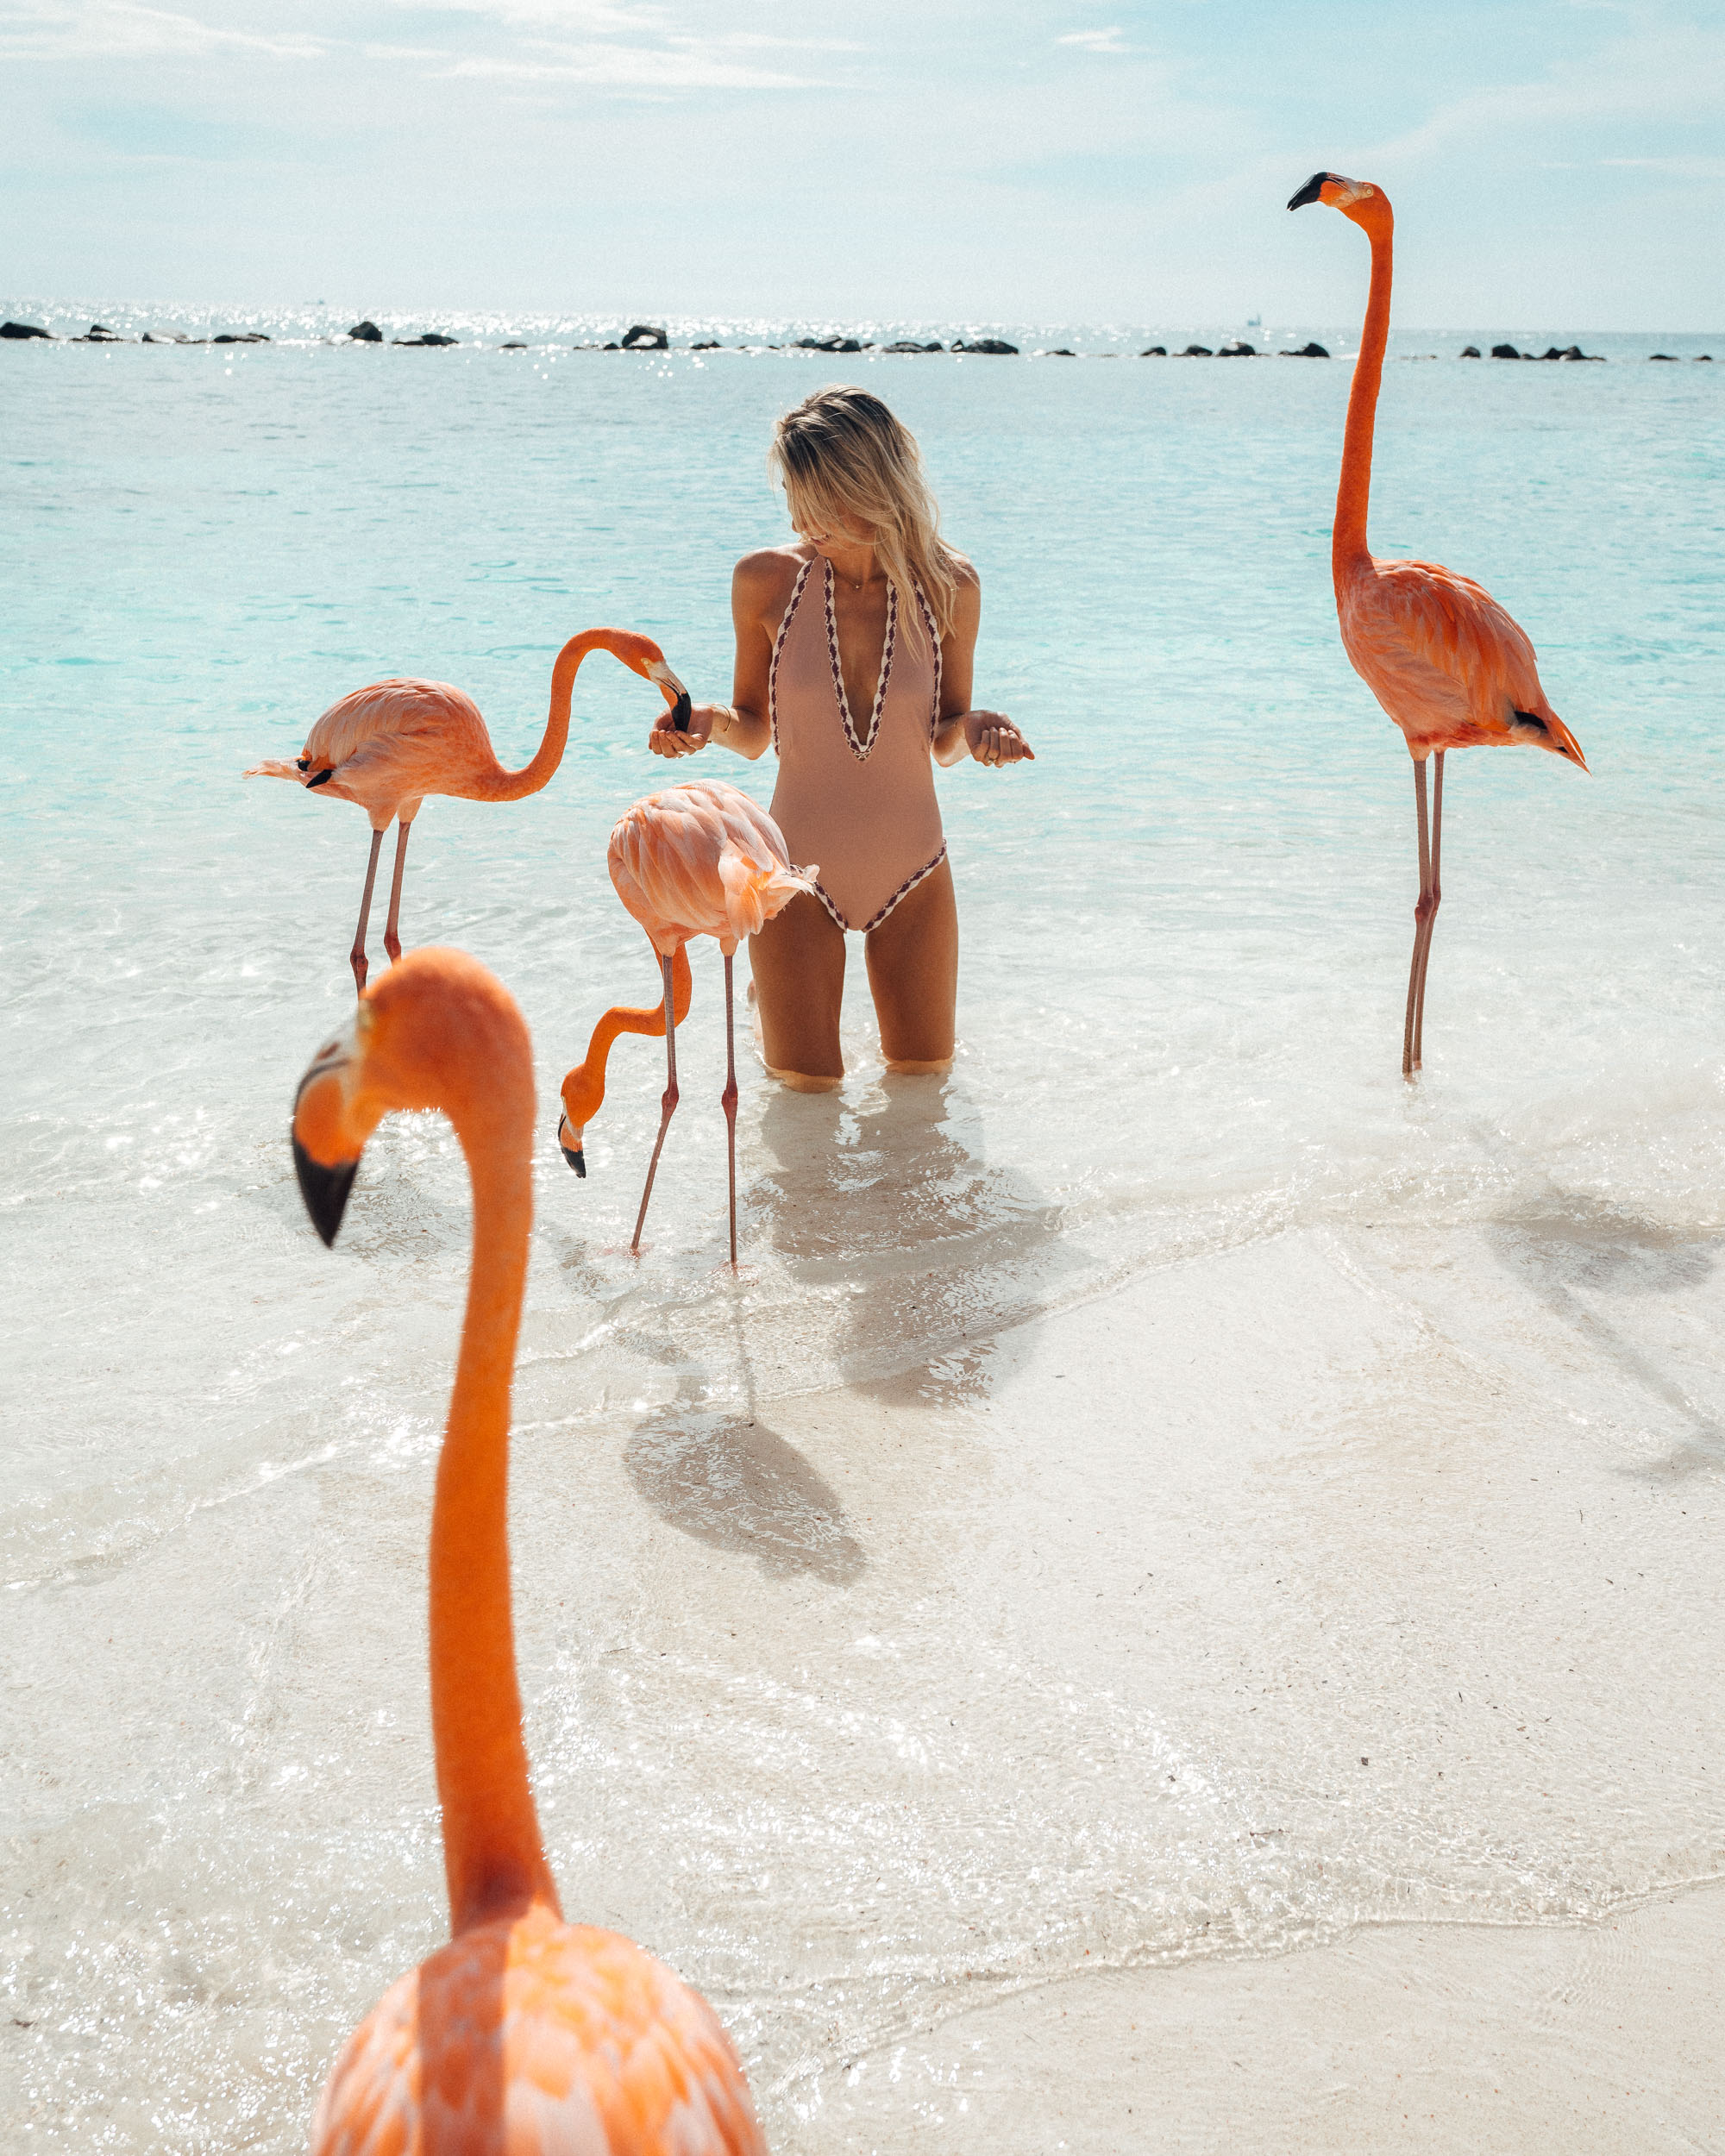 Feeding the flamingos in Aruba via Find Us Lost